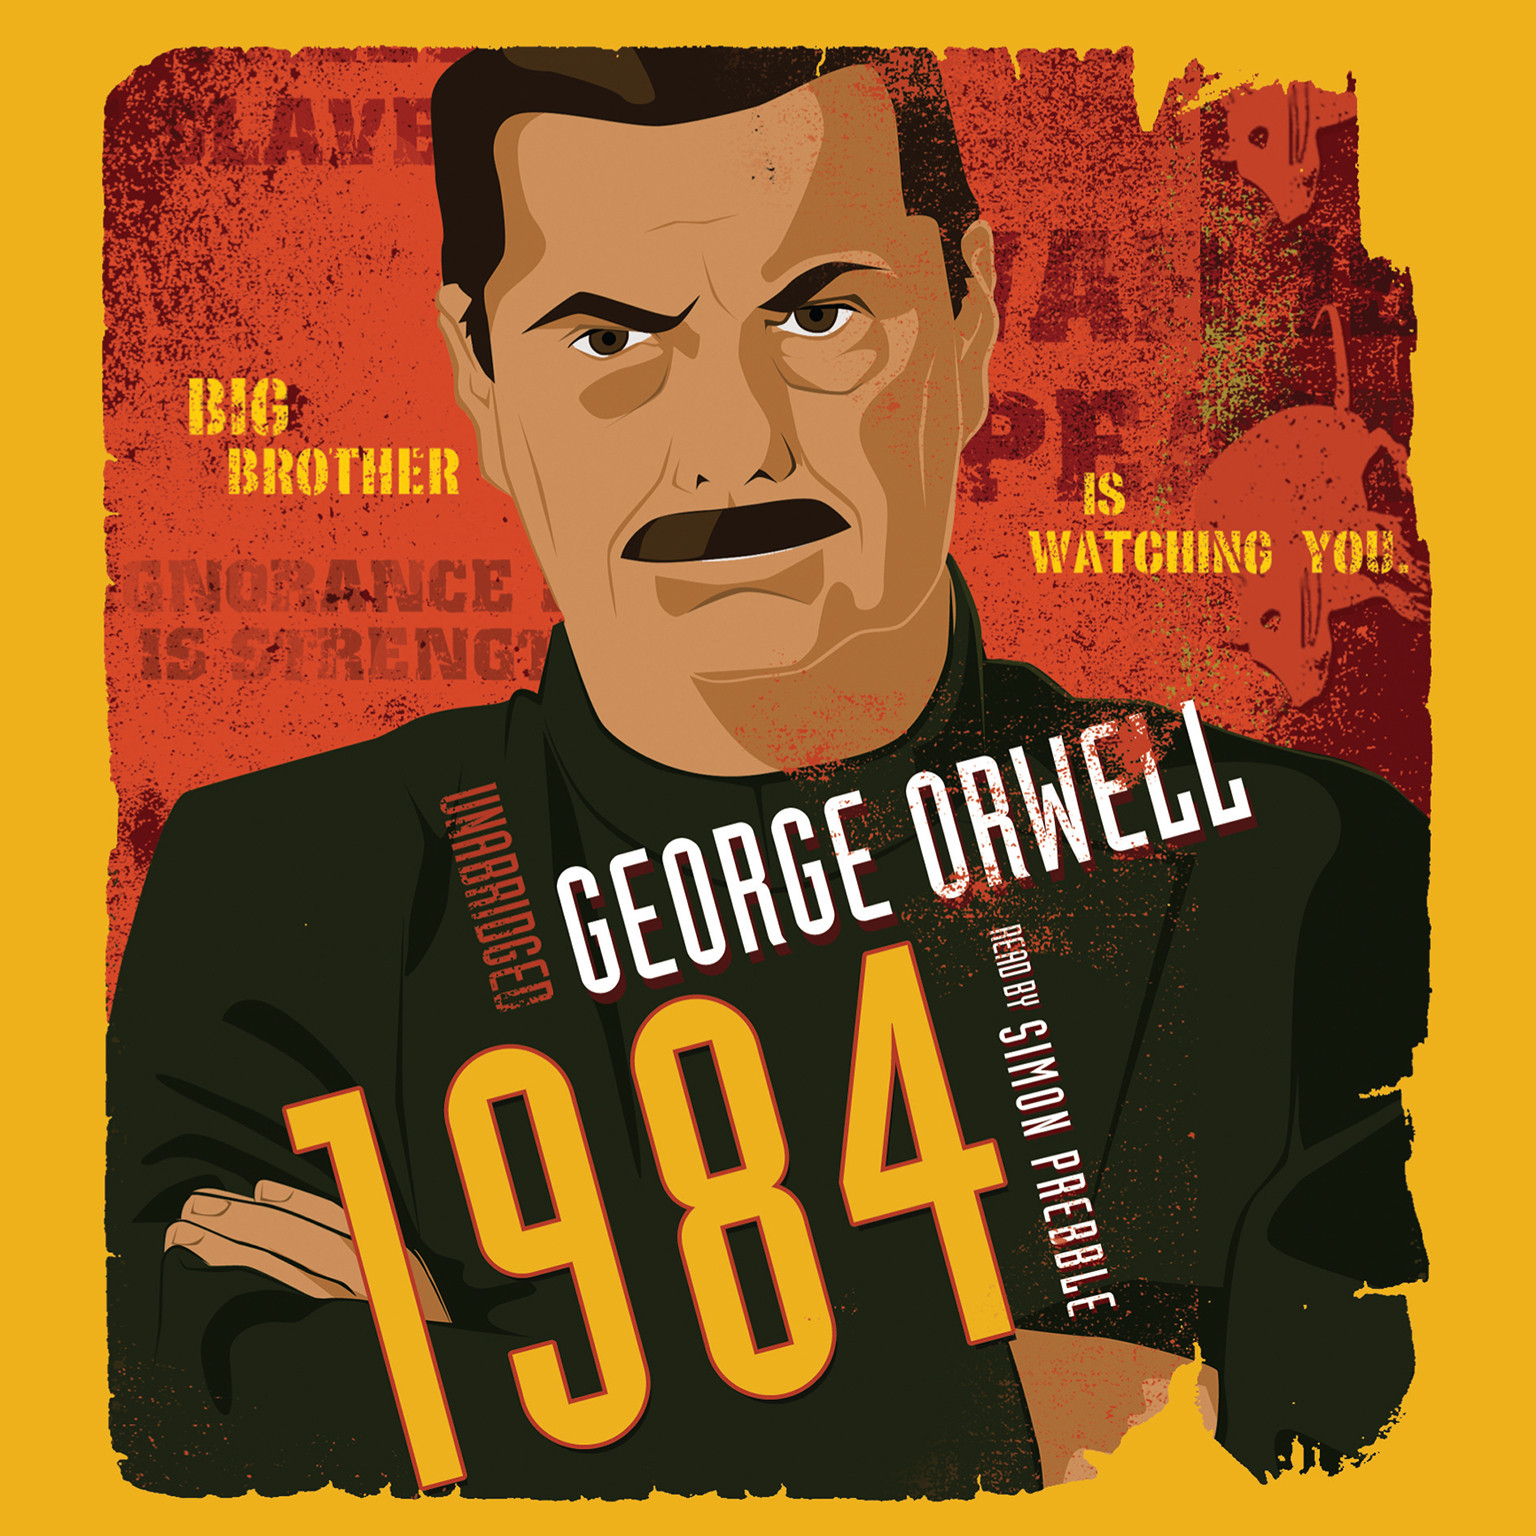 George Orwell 1984 Audiobook Download Torrent